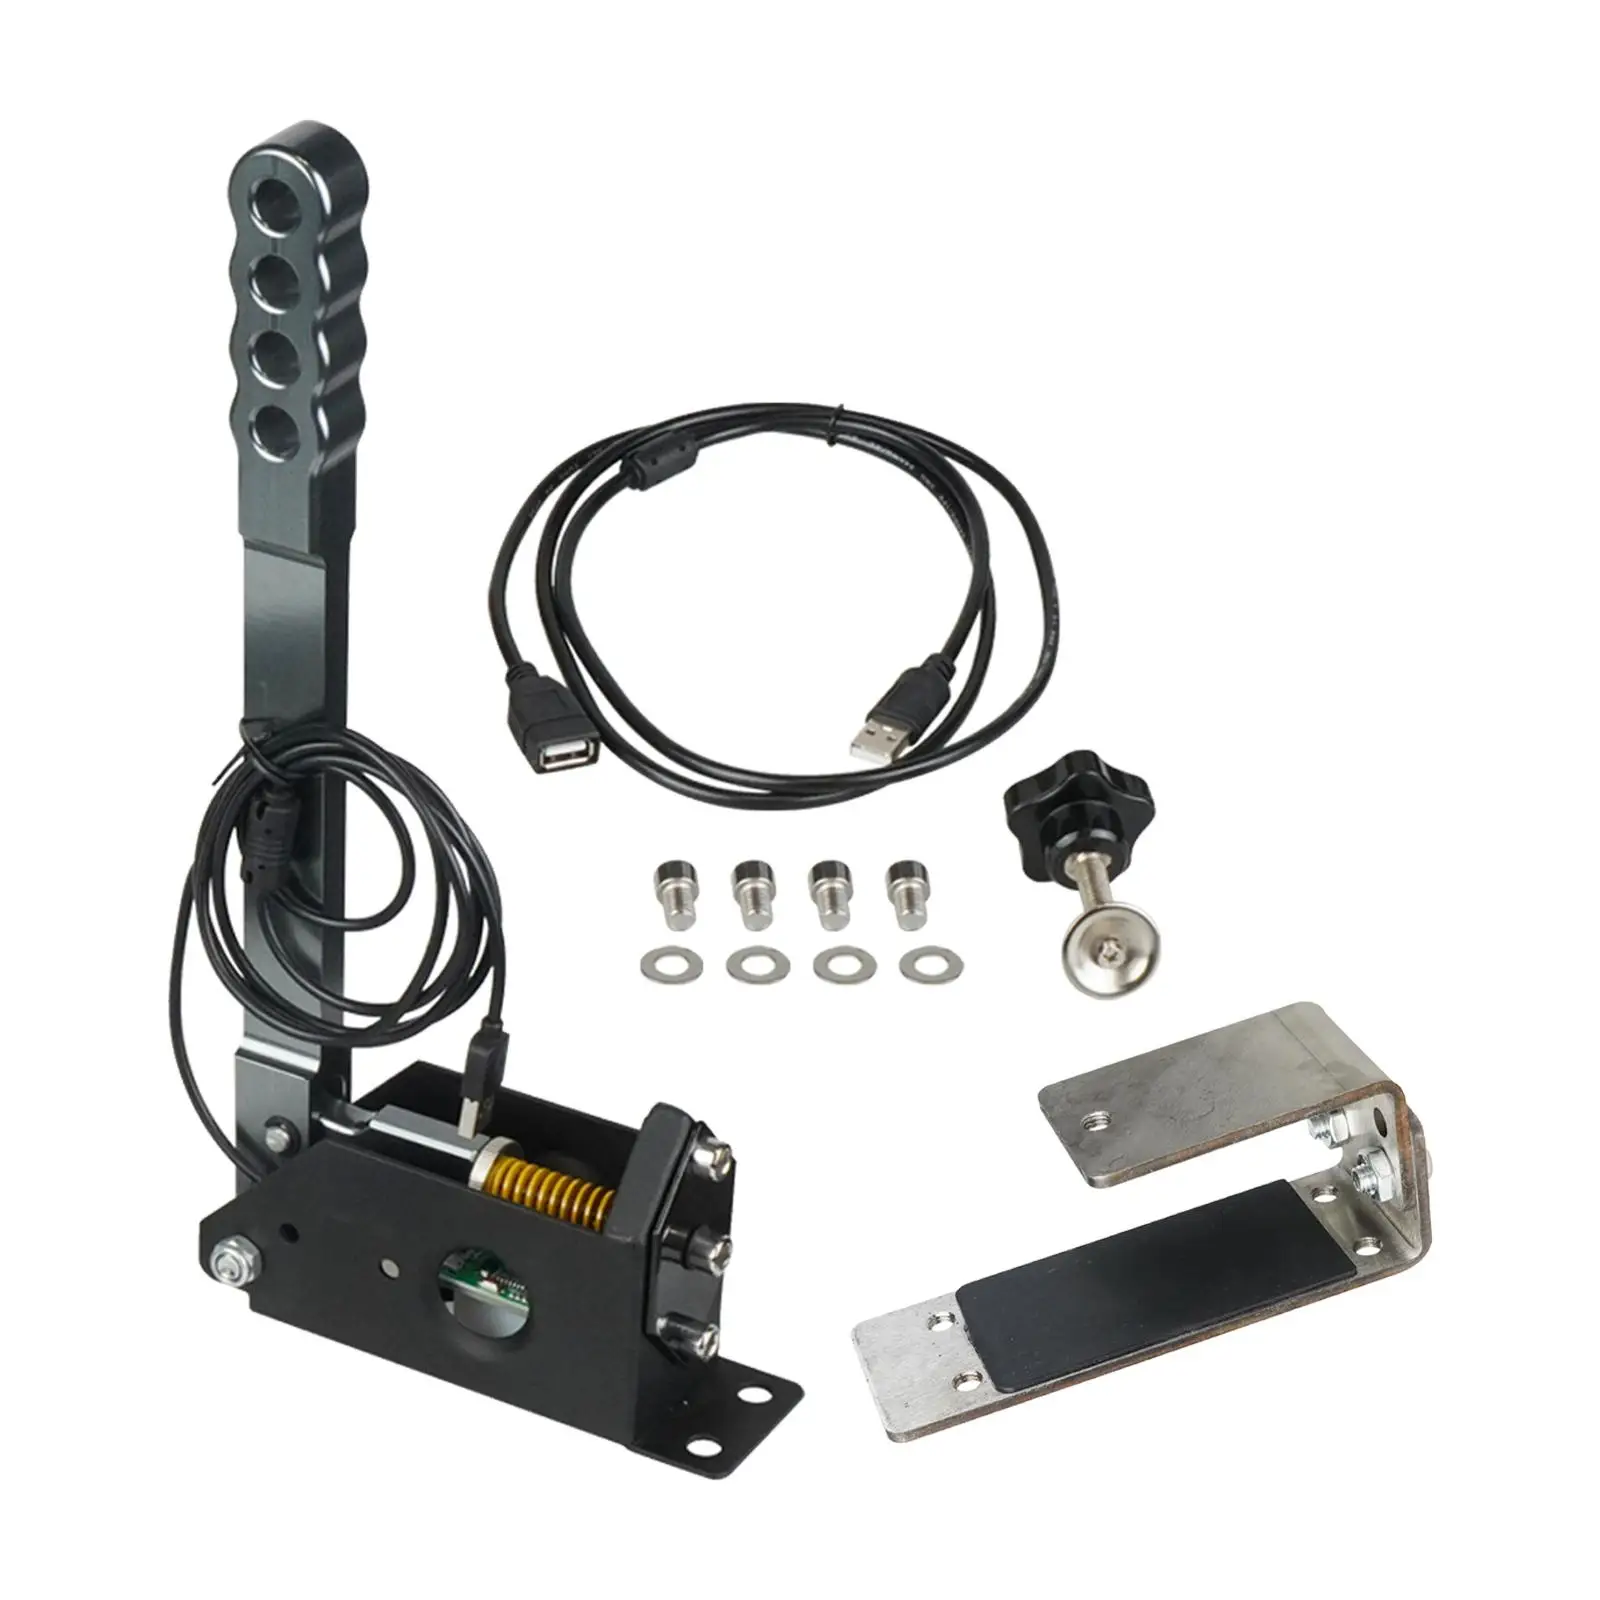 Handbrake Spare Parts USB Car Accessories for Logitech G29 Games